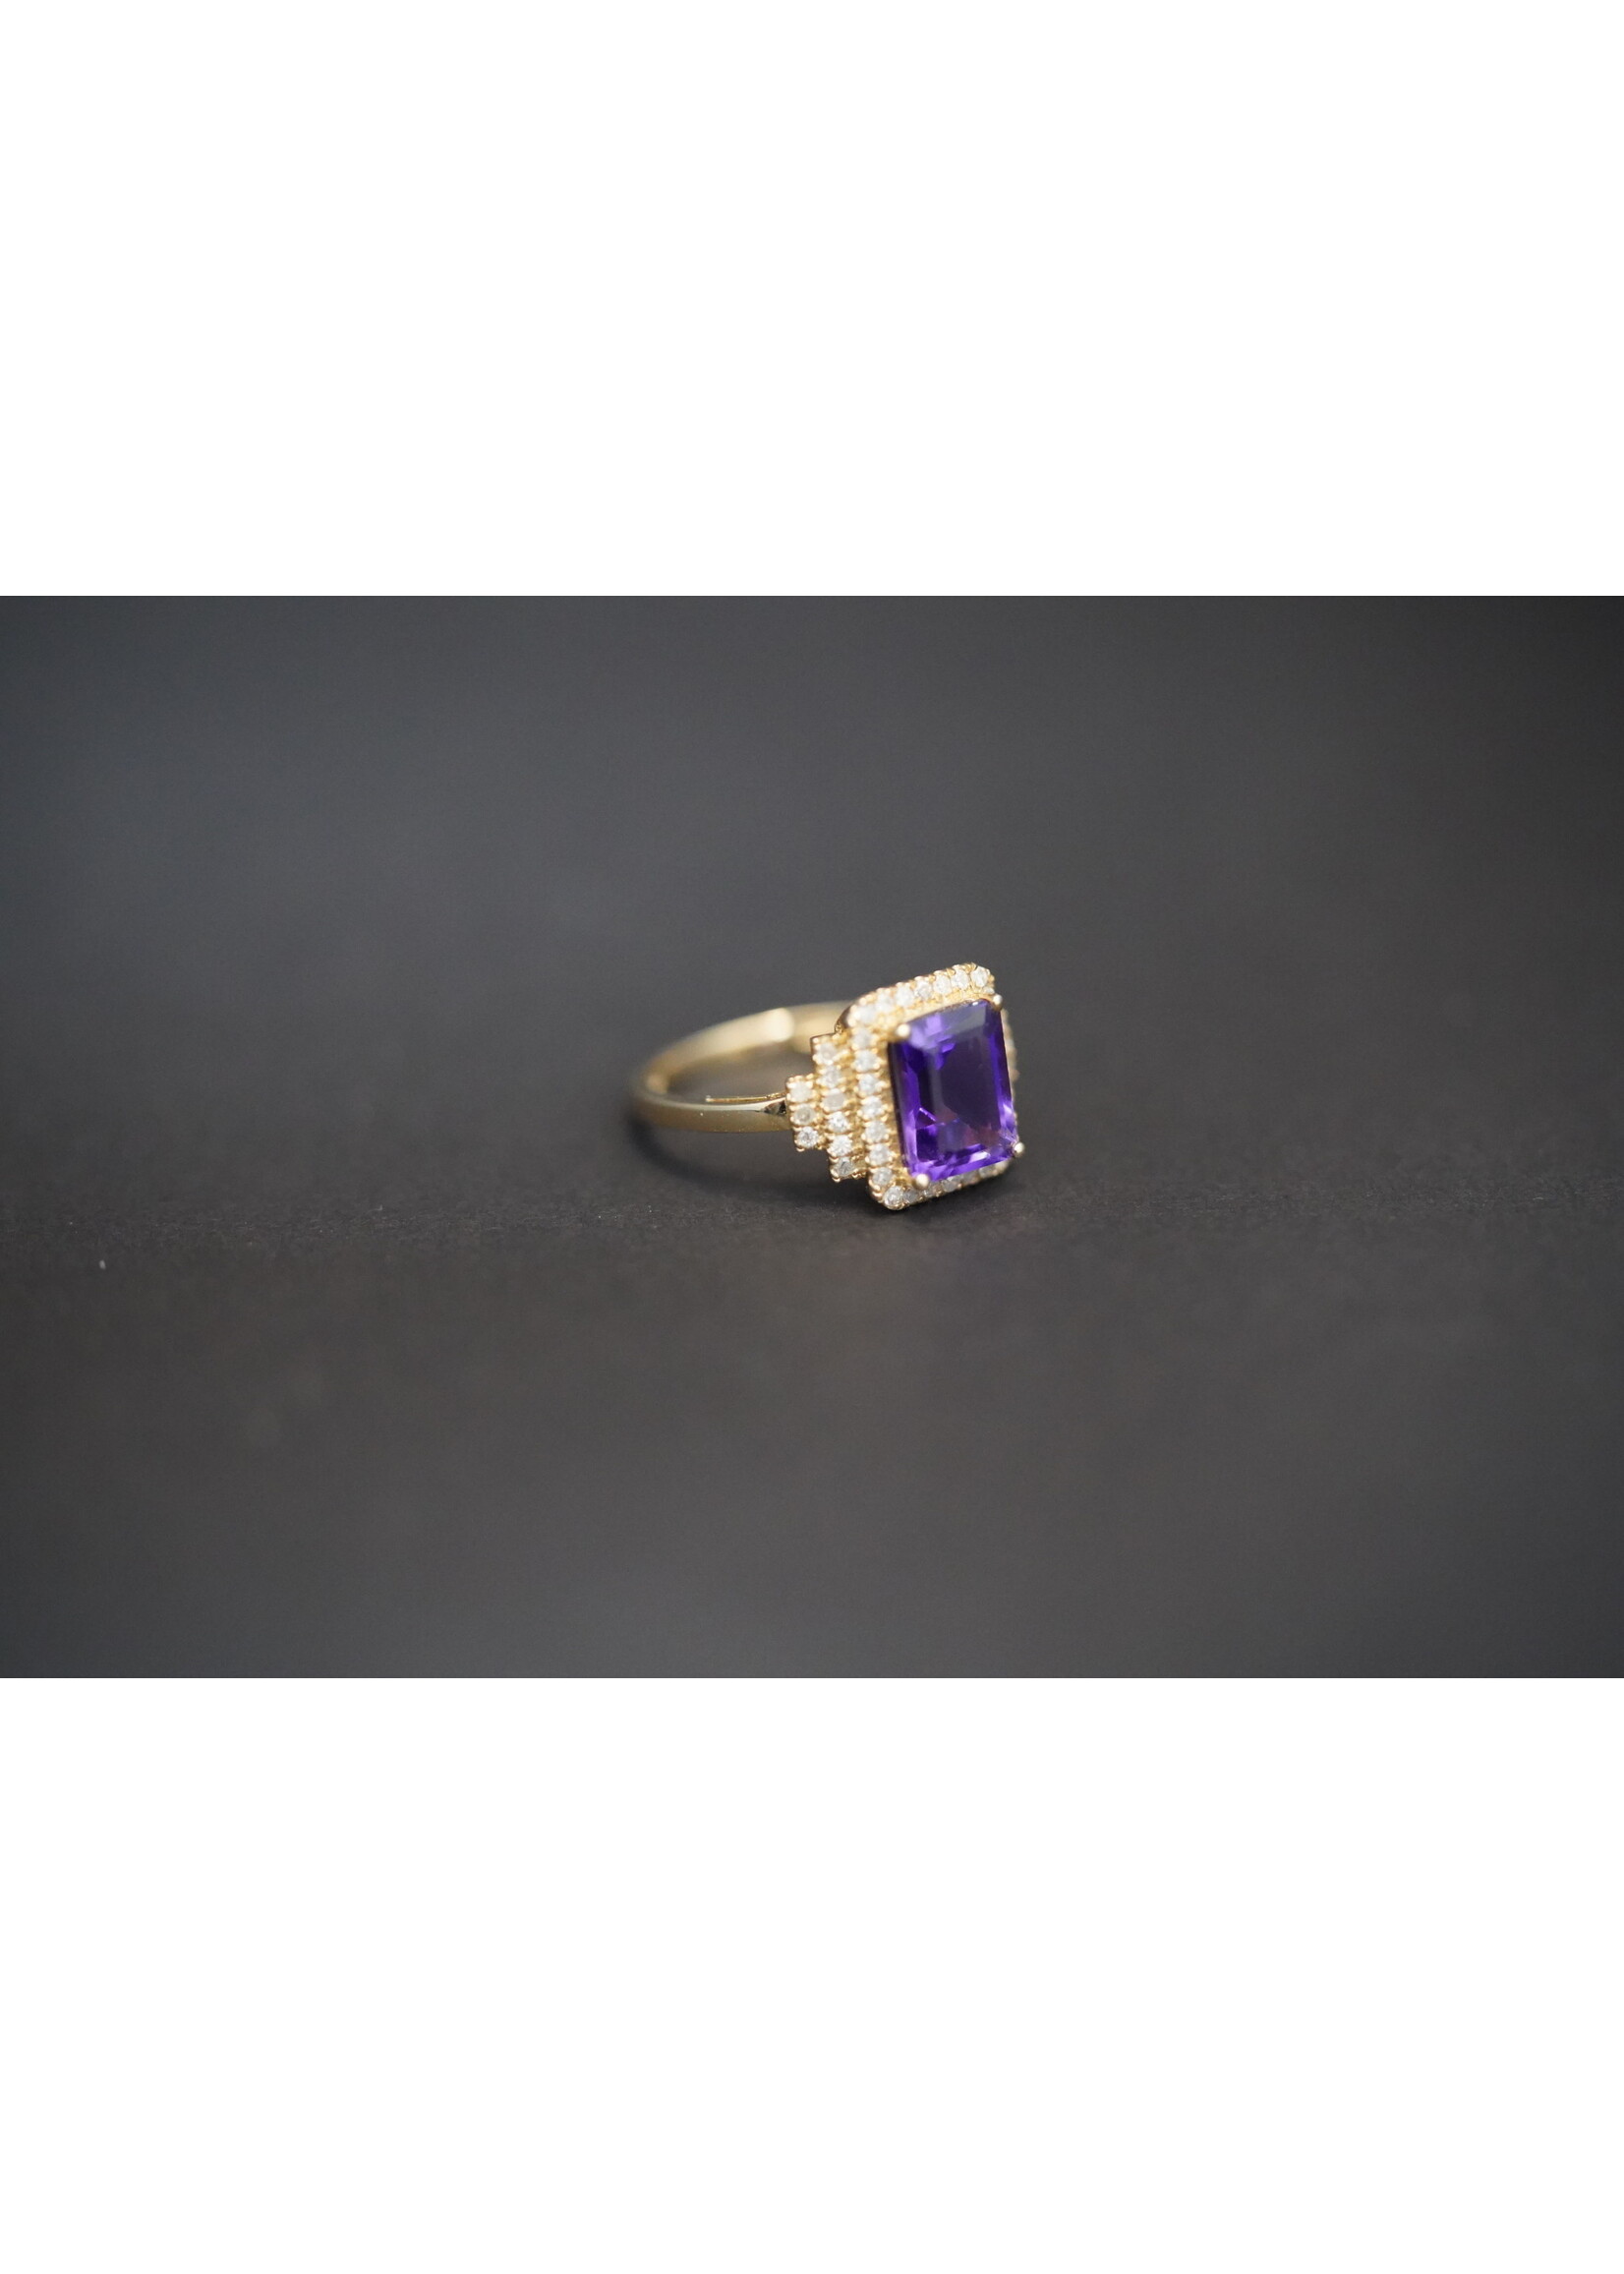 14KY 2.70g 2.60ctw (2.26ctr) Amethyst & Diamond Fashion Ring (size 7)